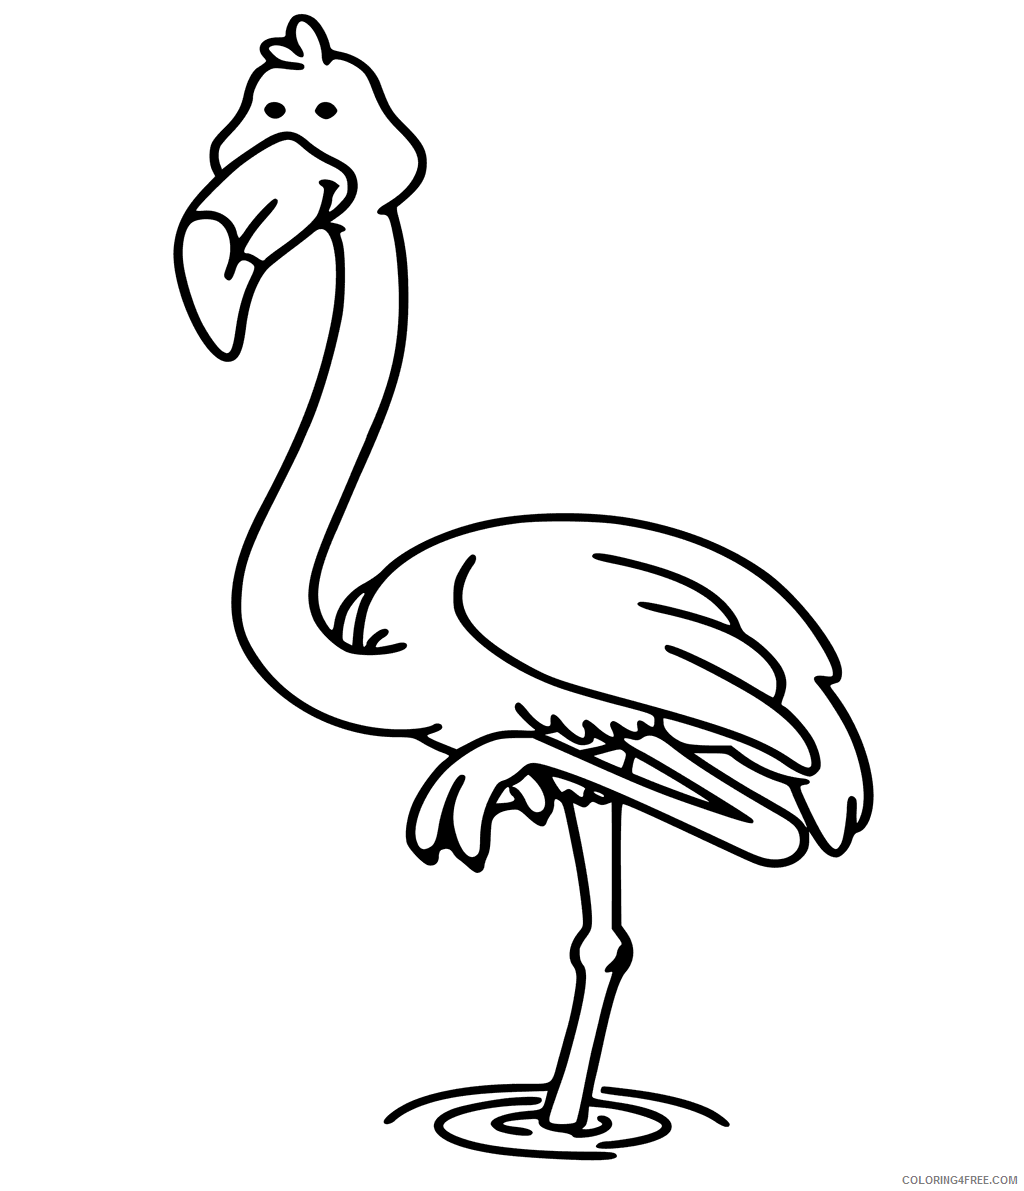 Flamingos Coloring Pages Animal Printable Sheets Cartoon Flamingo for Kids 2021 Coloring4free